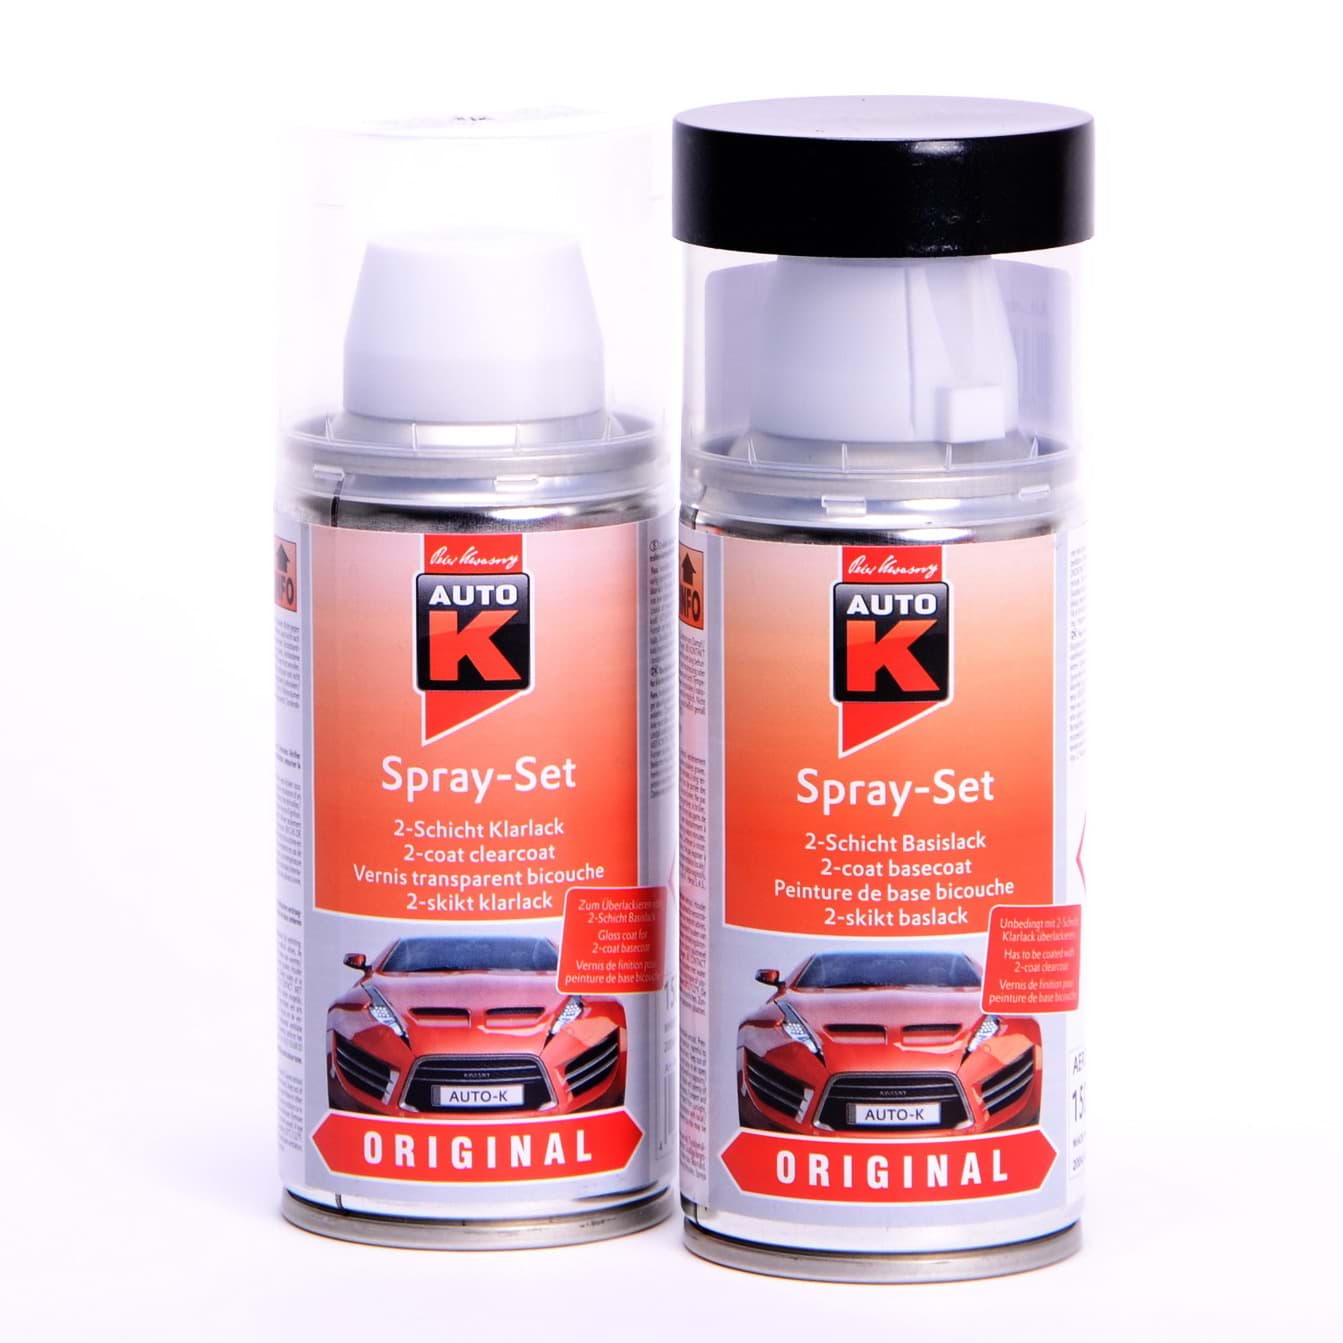 Auto-K Spray-Set Autolack für Mercedes 195 Meteorgrau met 23334 resmi